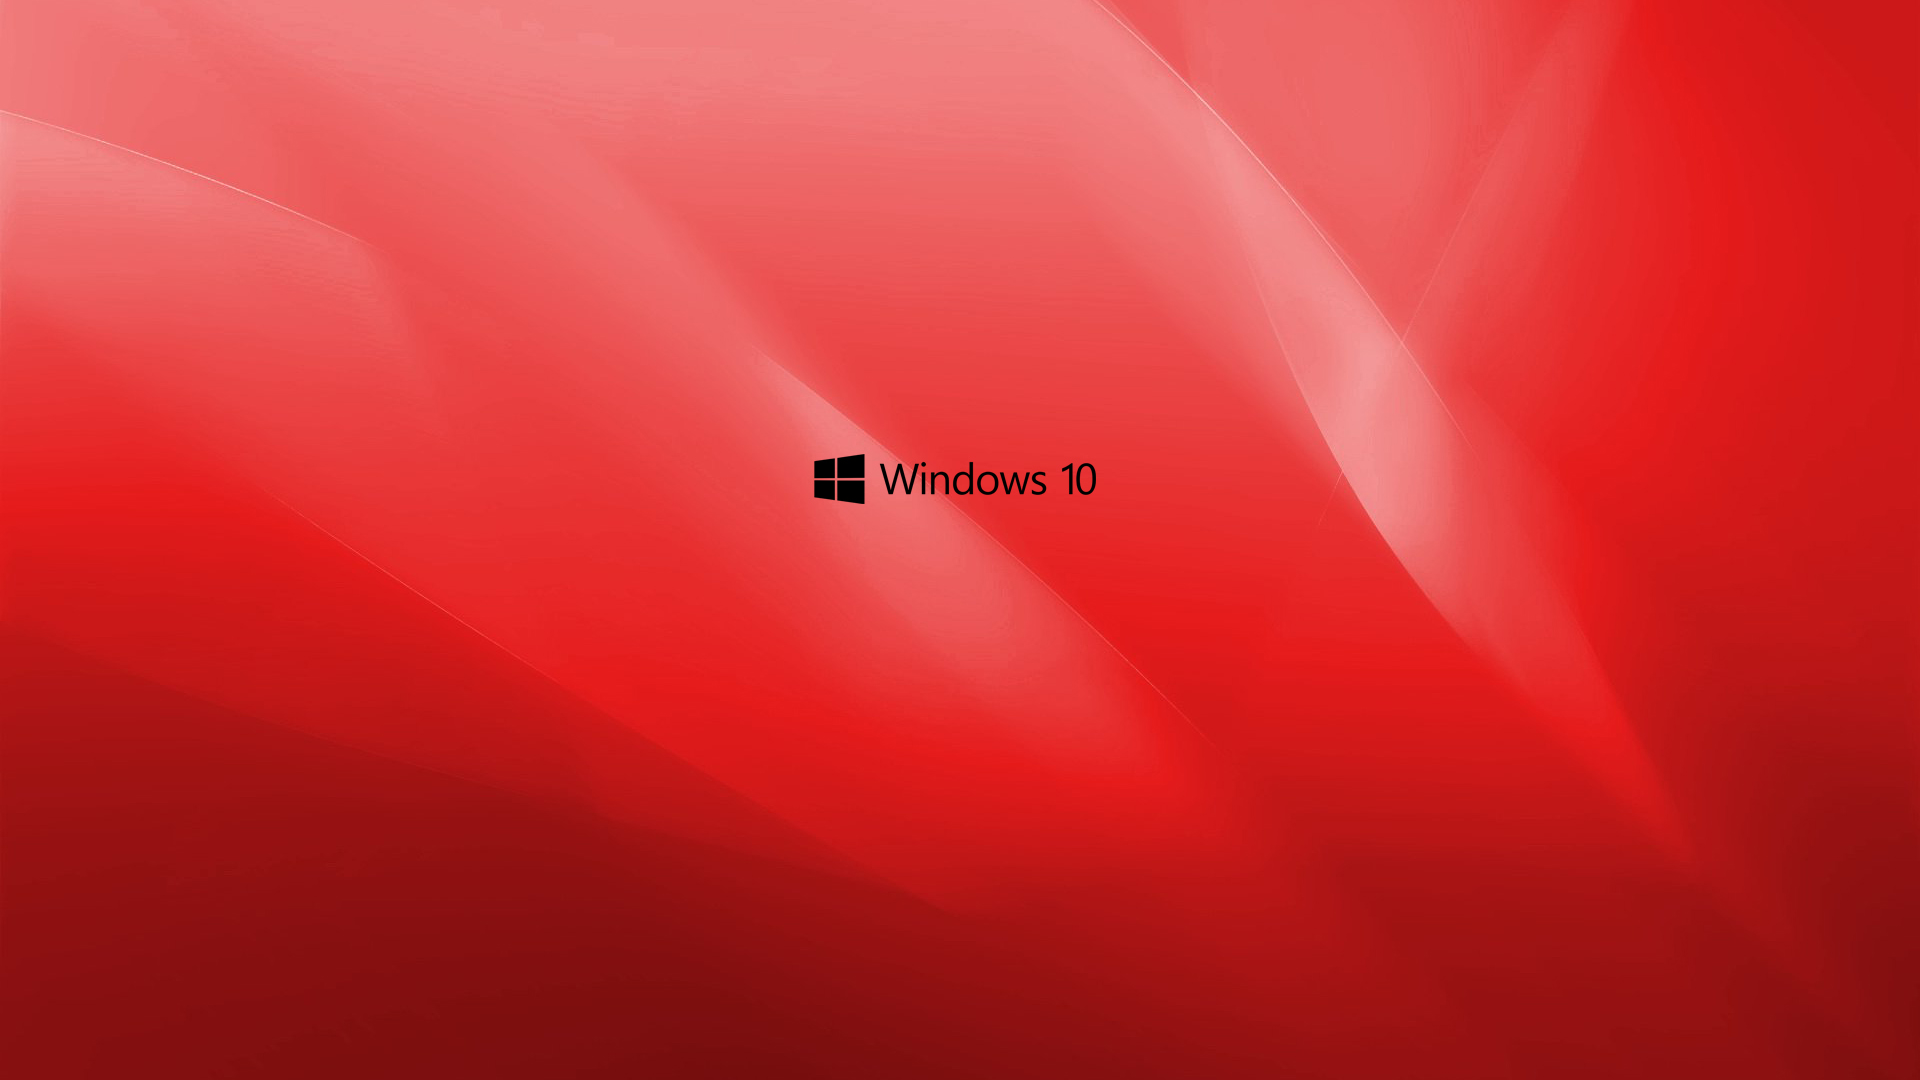 fondo de pantalla de windows 10 rojo,rojo,rosado,naranja,textil,melocotón